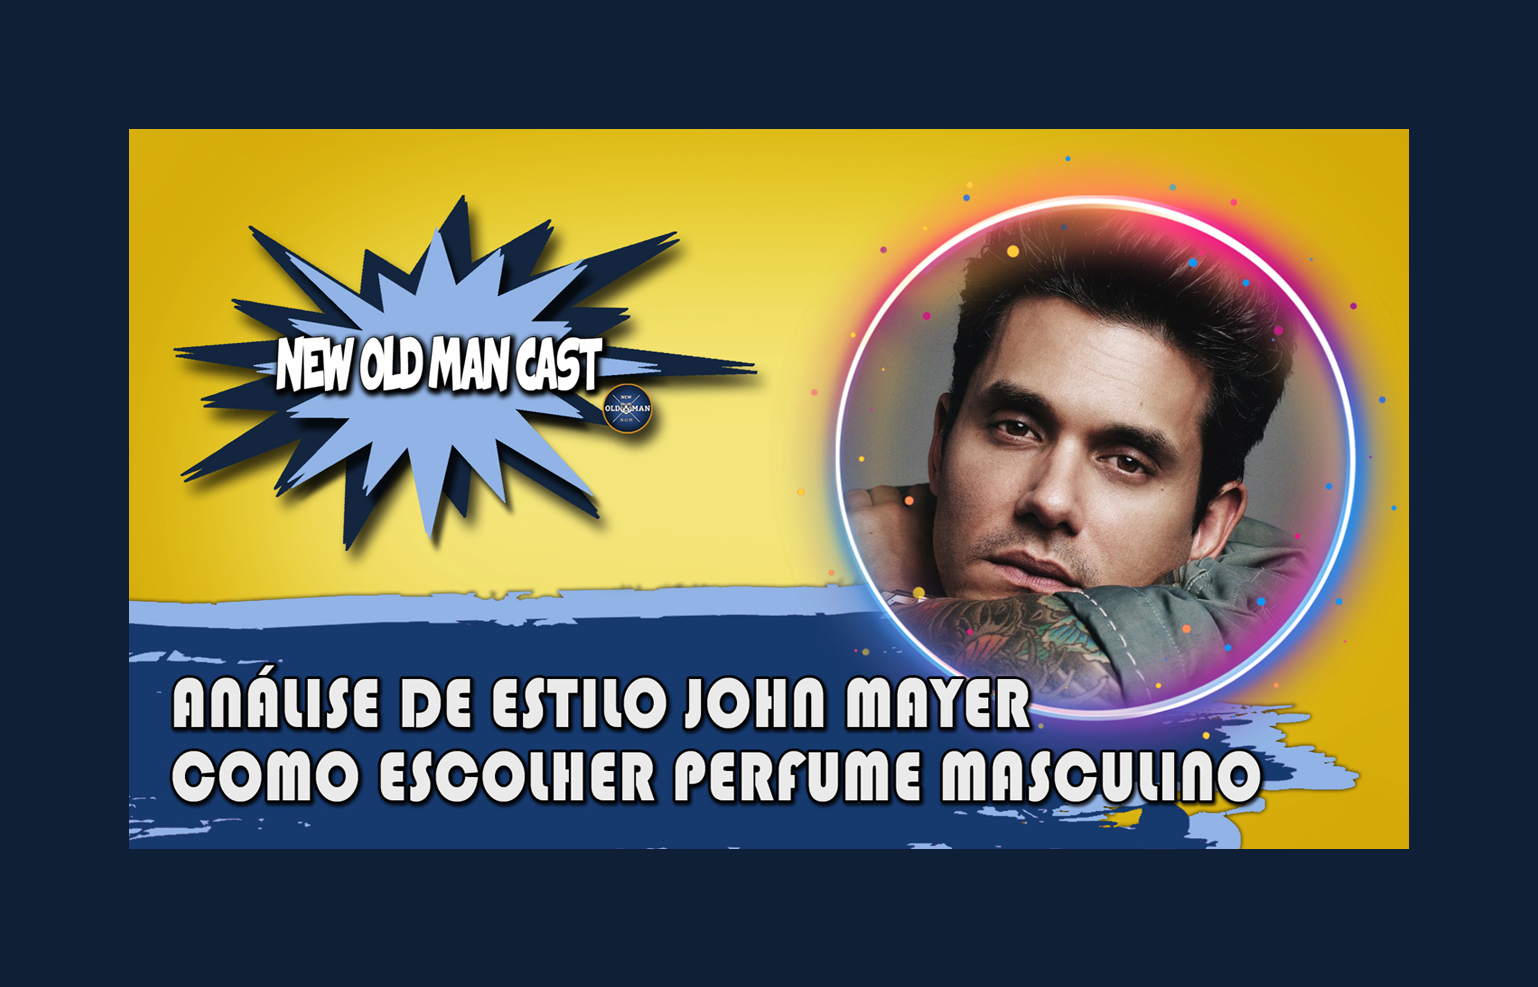 New Old Man Cast #49 - Como Escolher Perfume Masculino - Análise de Estilo John Mayer